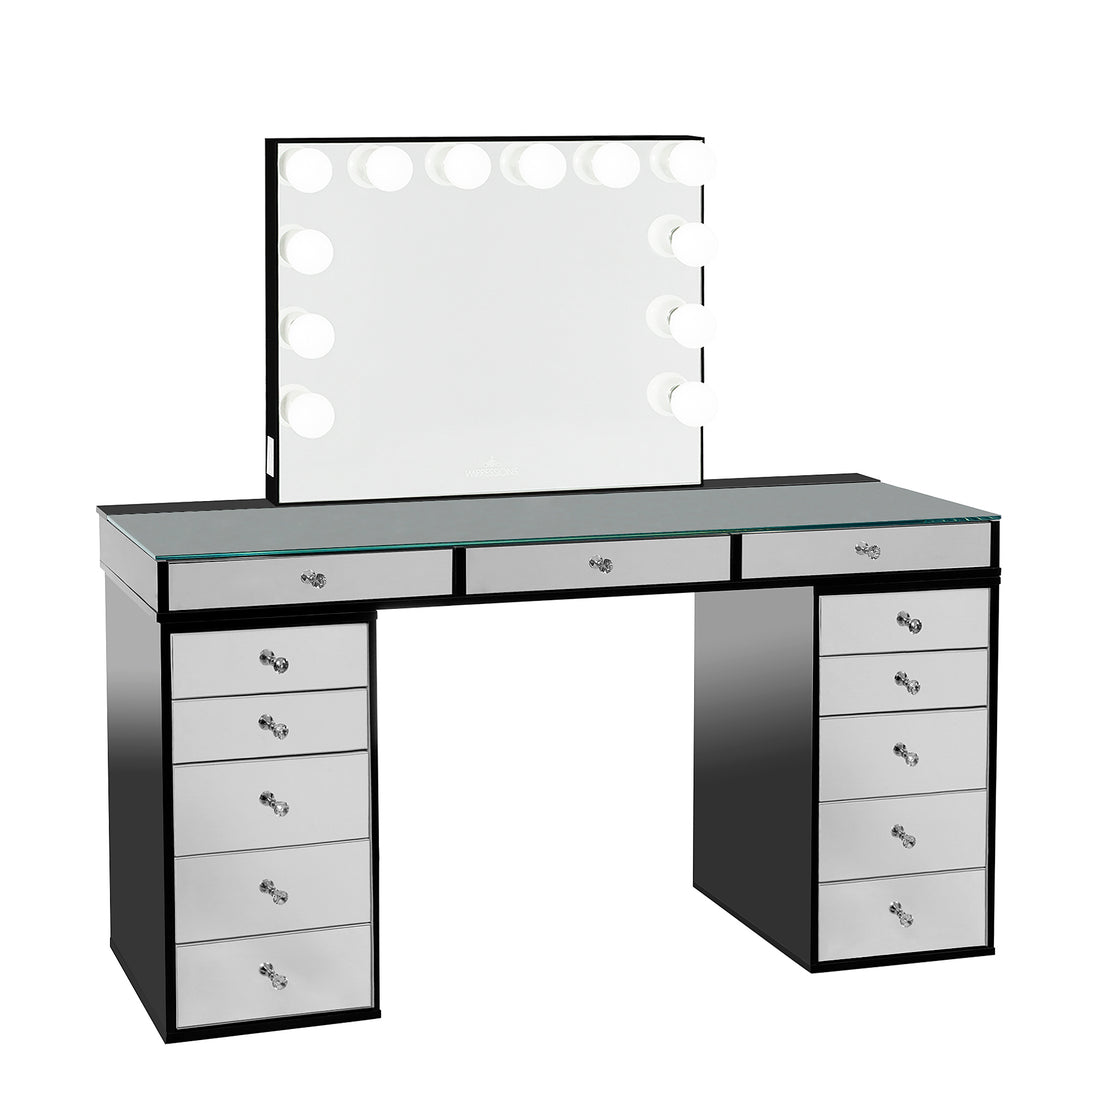 Slaystation® Pro Premium Mirrored Table & Glow Pro Vanity Mirror Bundle